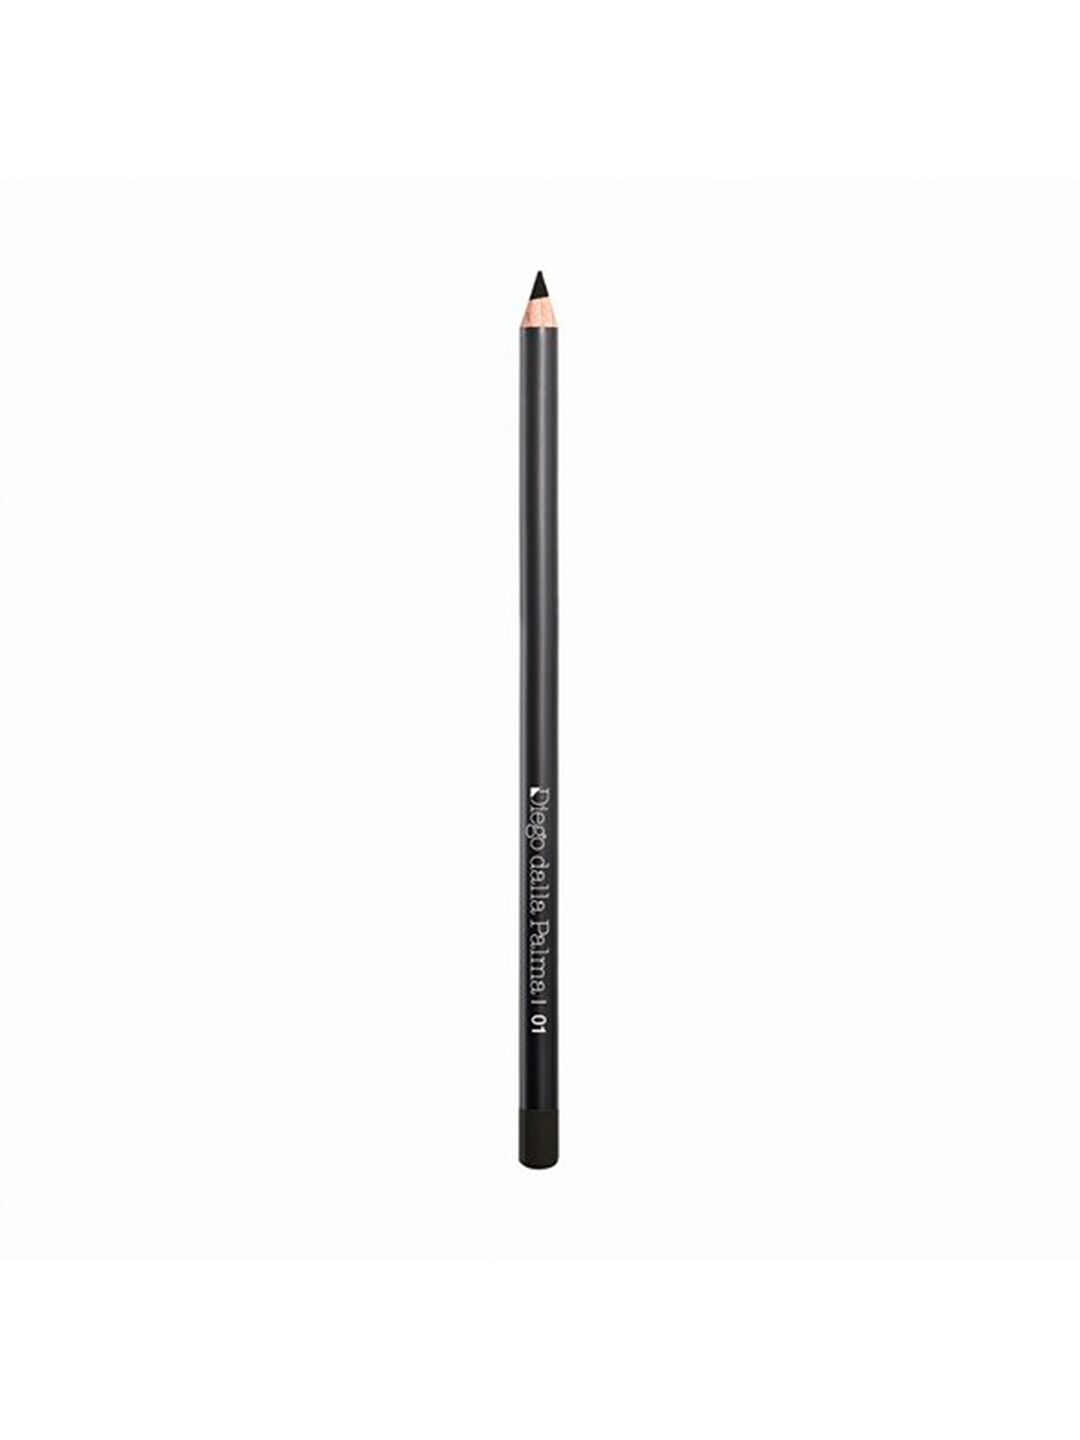 Diego dalla Palma MILANO Eye Pencil - Black 01 Price in India